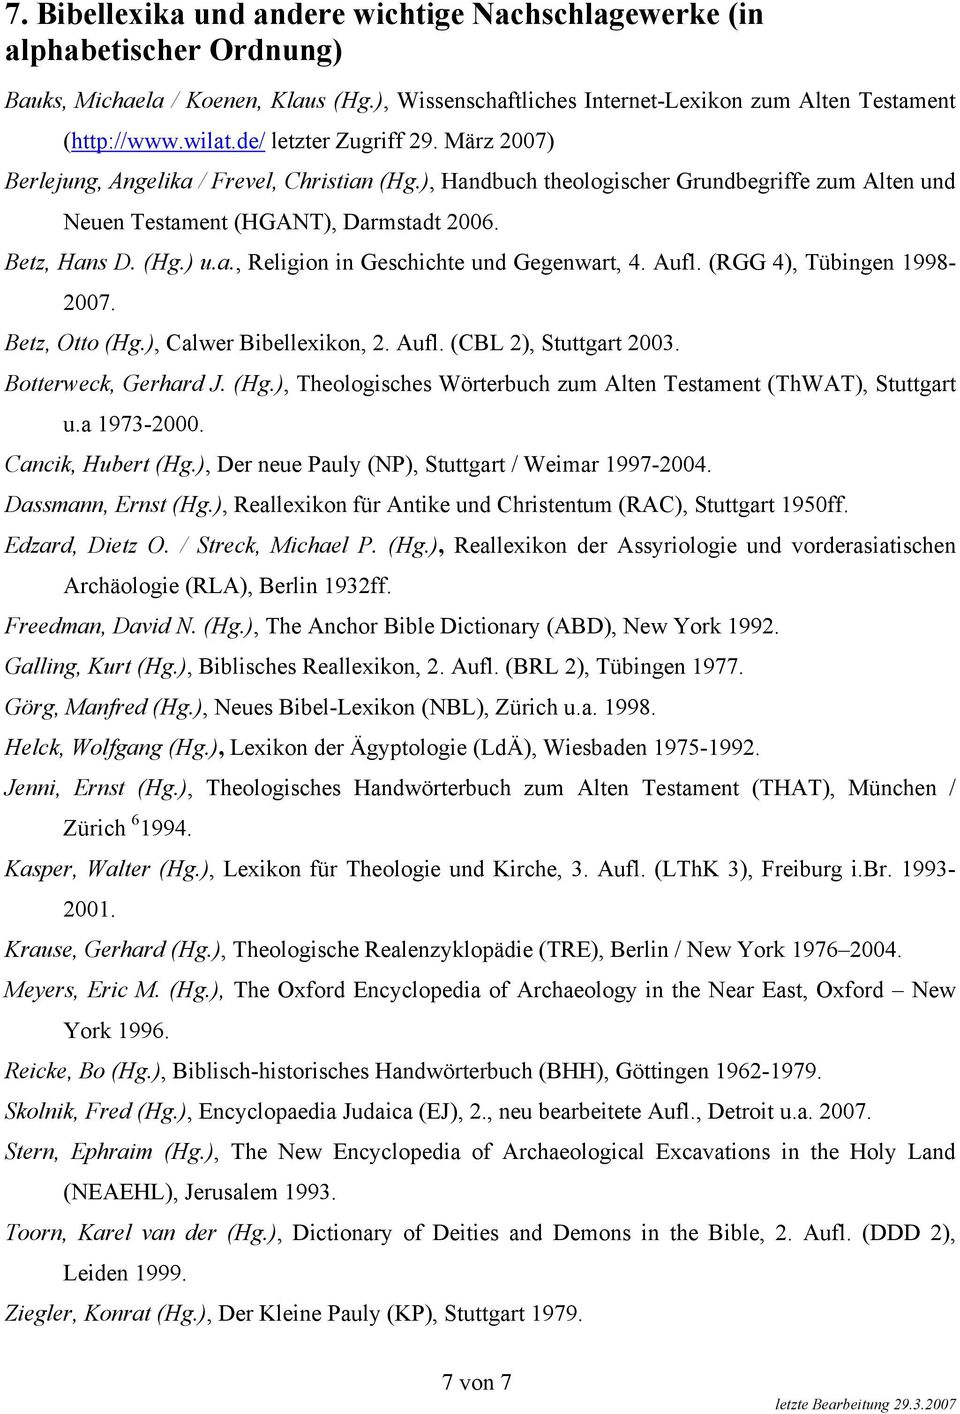 Aufl. (RGG 4), Tübingen 1998-2007. Betz, Otto (Hg.), Calwer Bibellexikon, 2. Aufl. (CBL 2), Stuttgart 2003. Botterweck, Gerhard J. (Hg.), Theologisches Wörterbuch zum Alten Testament (ThWAT), Stuttgart u.